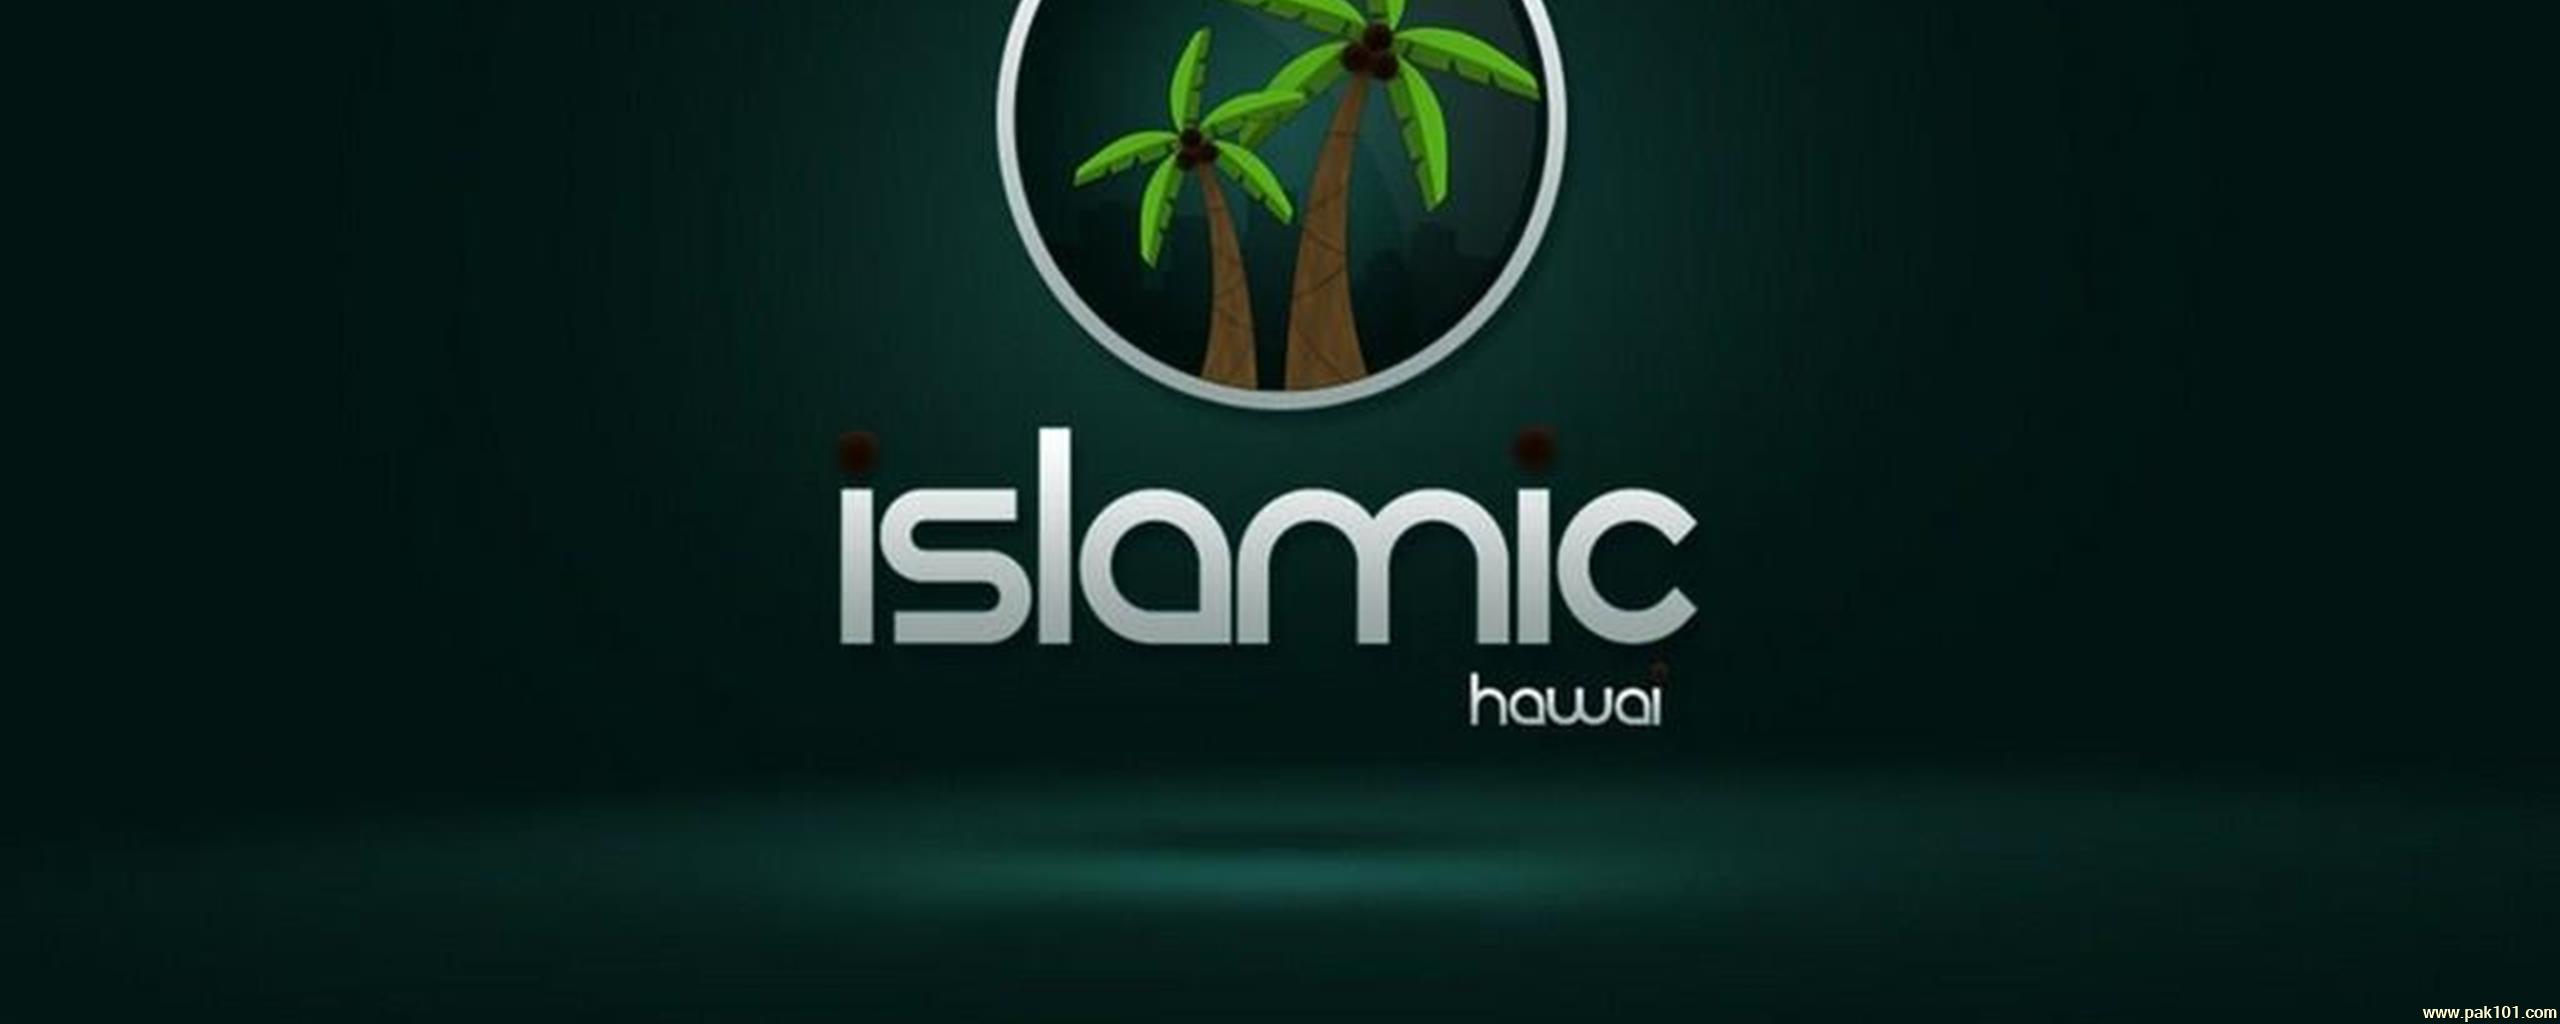 Wallpapers Islamic Islamic Tree And Moon High Quality Free